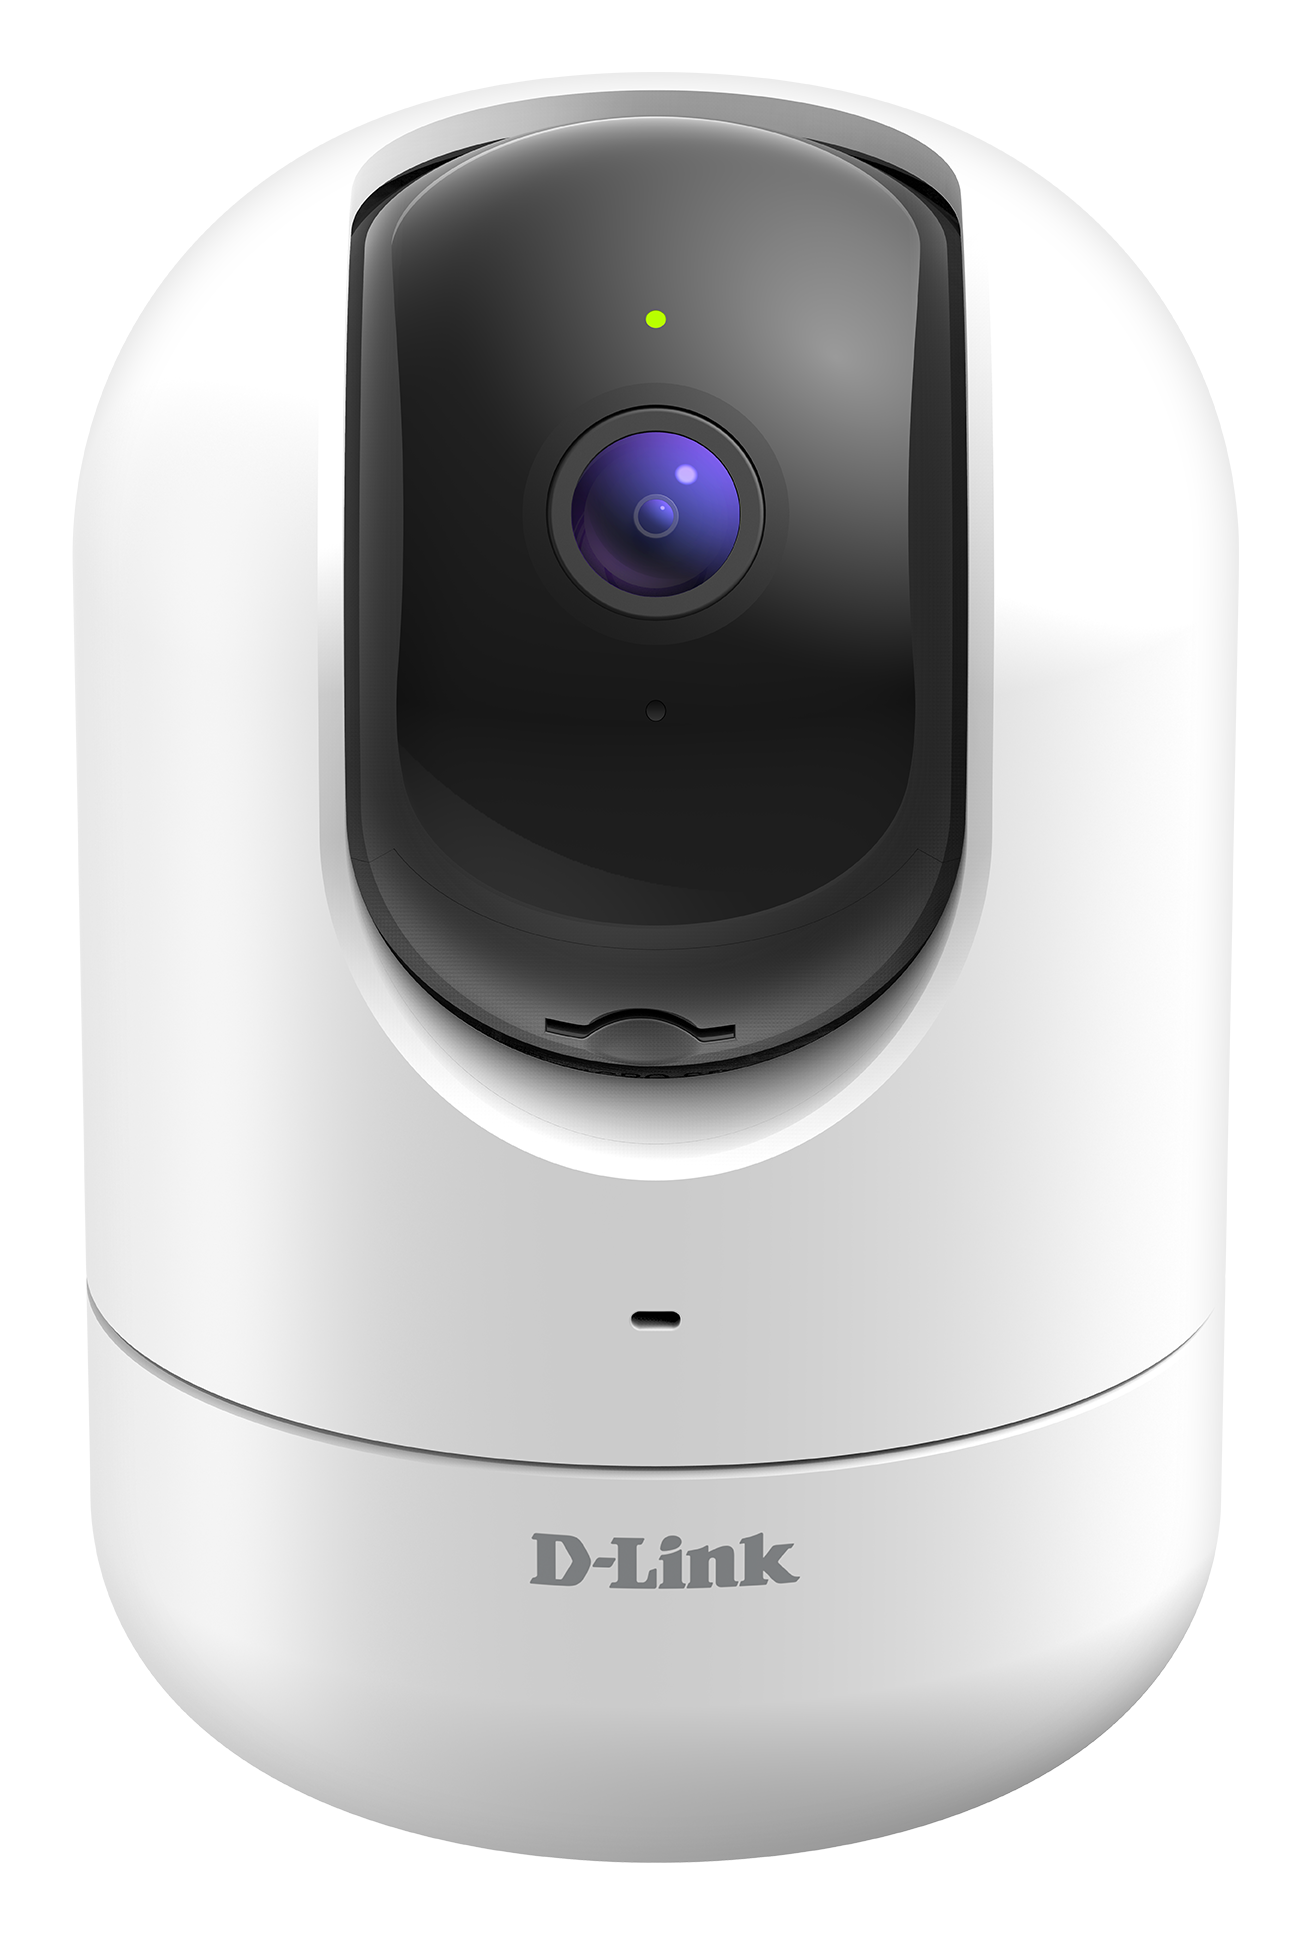 DCS-8526LH Full HD Pan & Tilt Wi-Fi Camera - front view